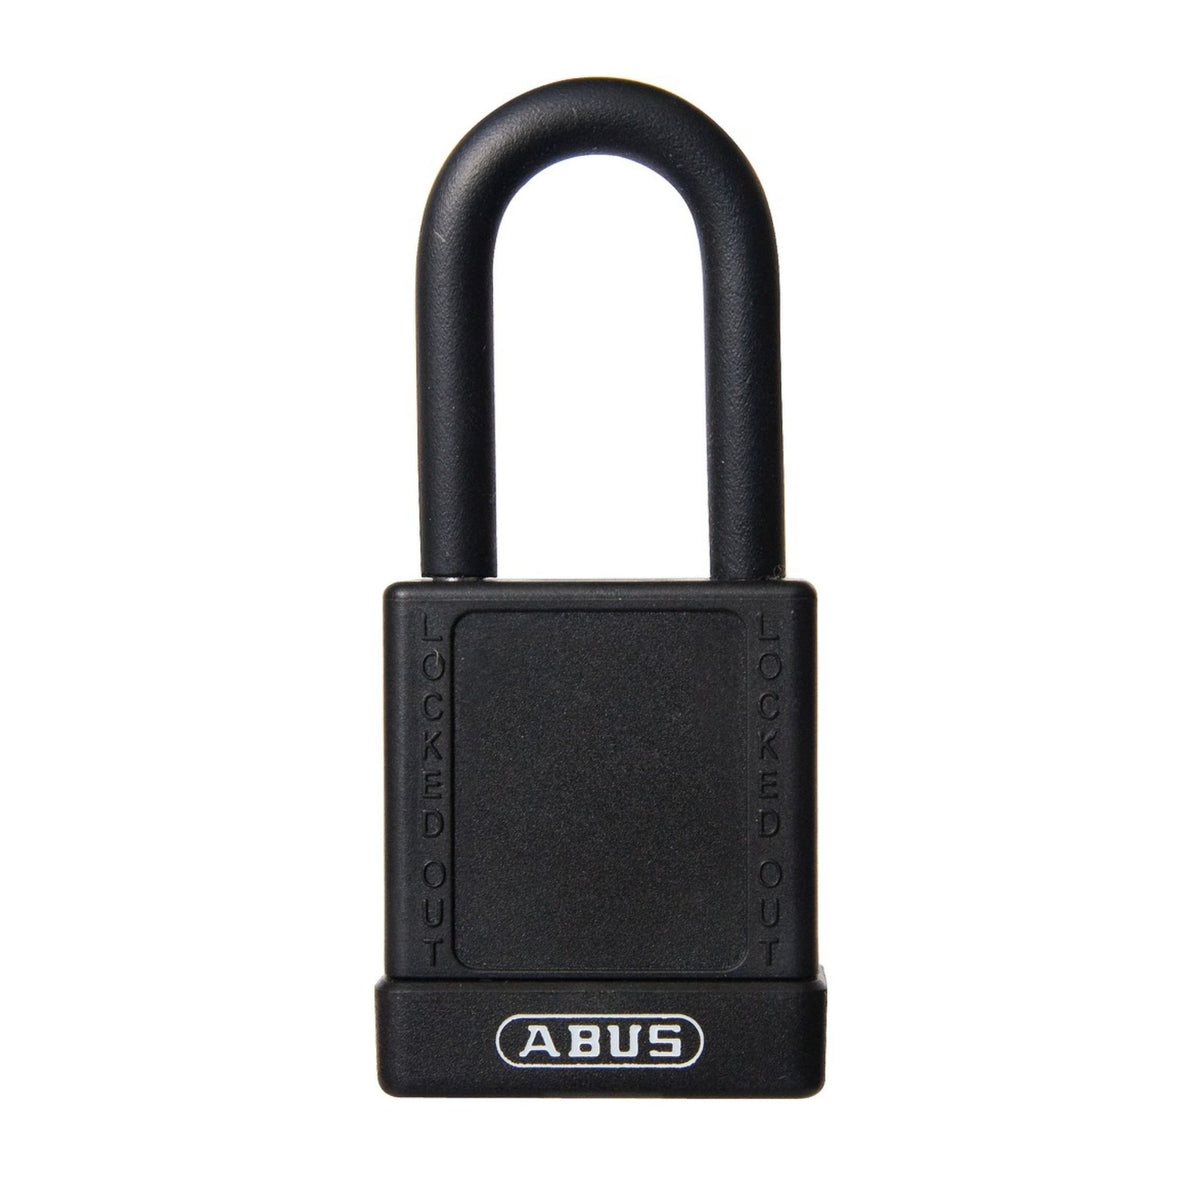 Abus 74/40 KA Keyed Alike Black Insulated Safety Padlock - The Lock Source